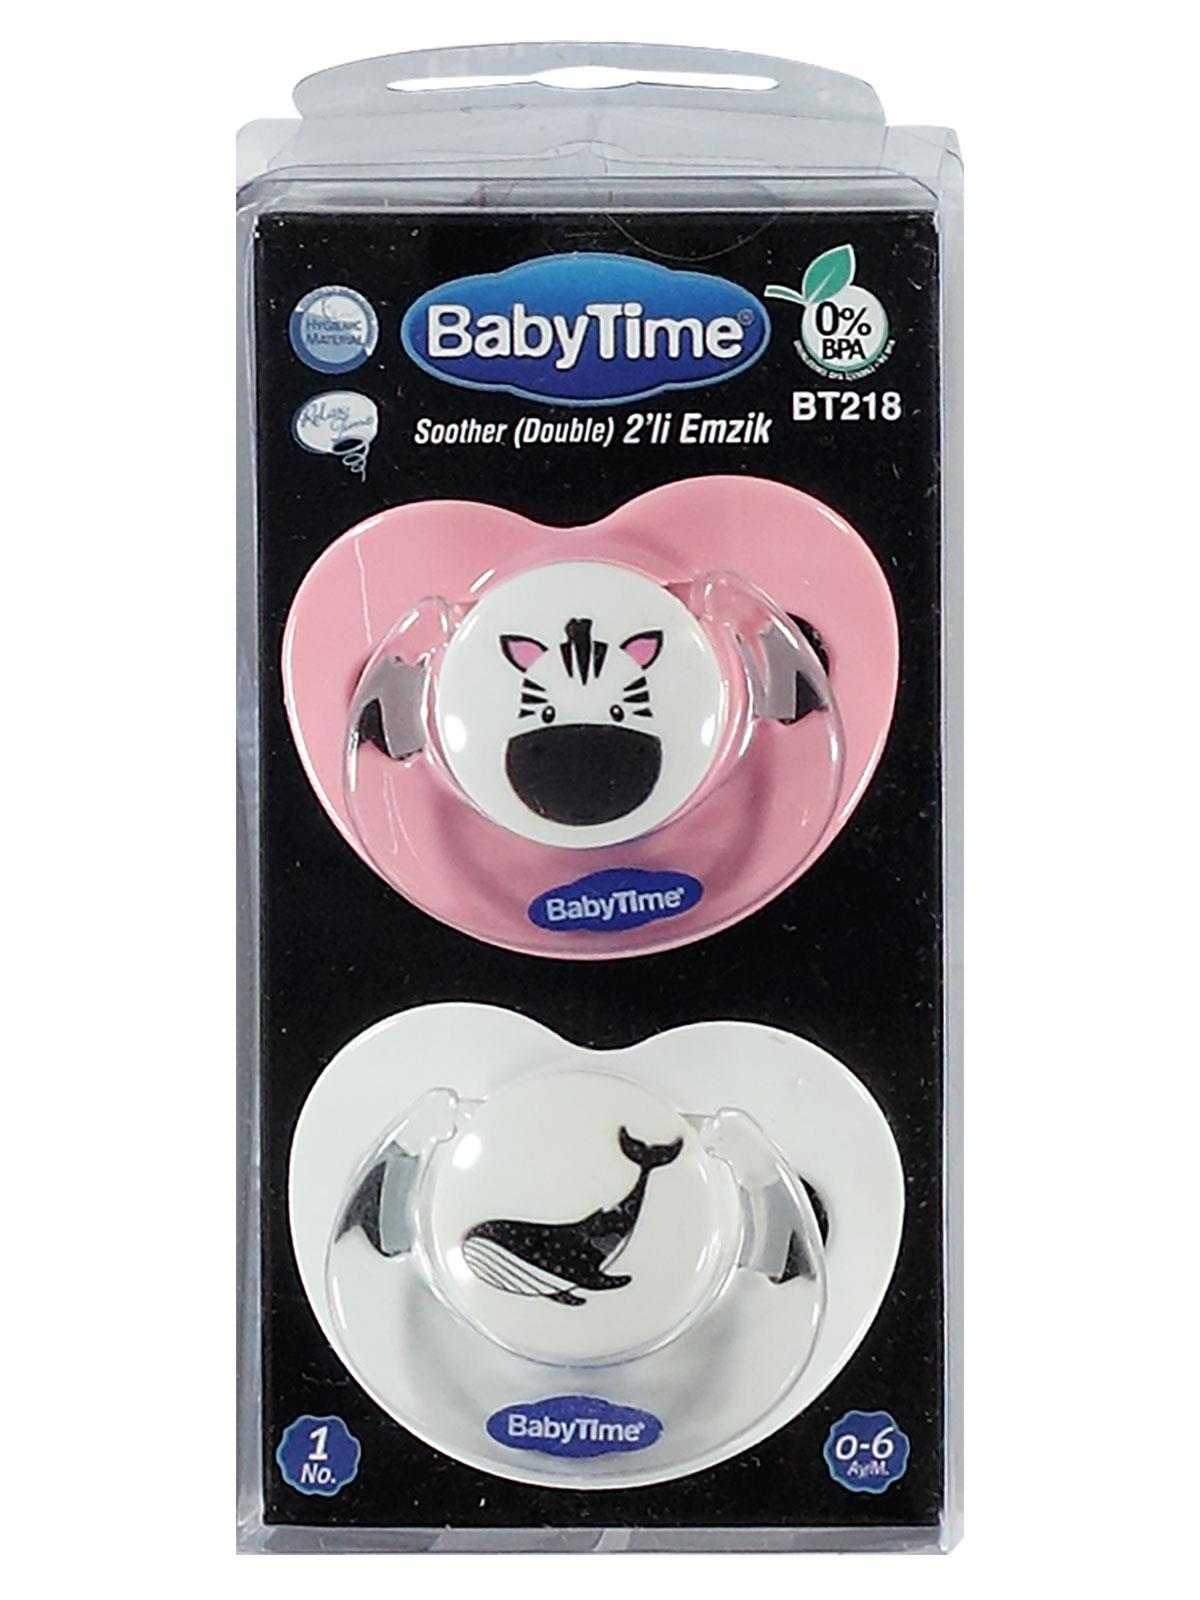 Baby Time Scoother Silikon Damaklı 2'li Emzik 0-6 Ay Beyaz-Pembe